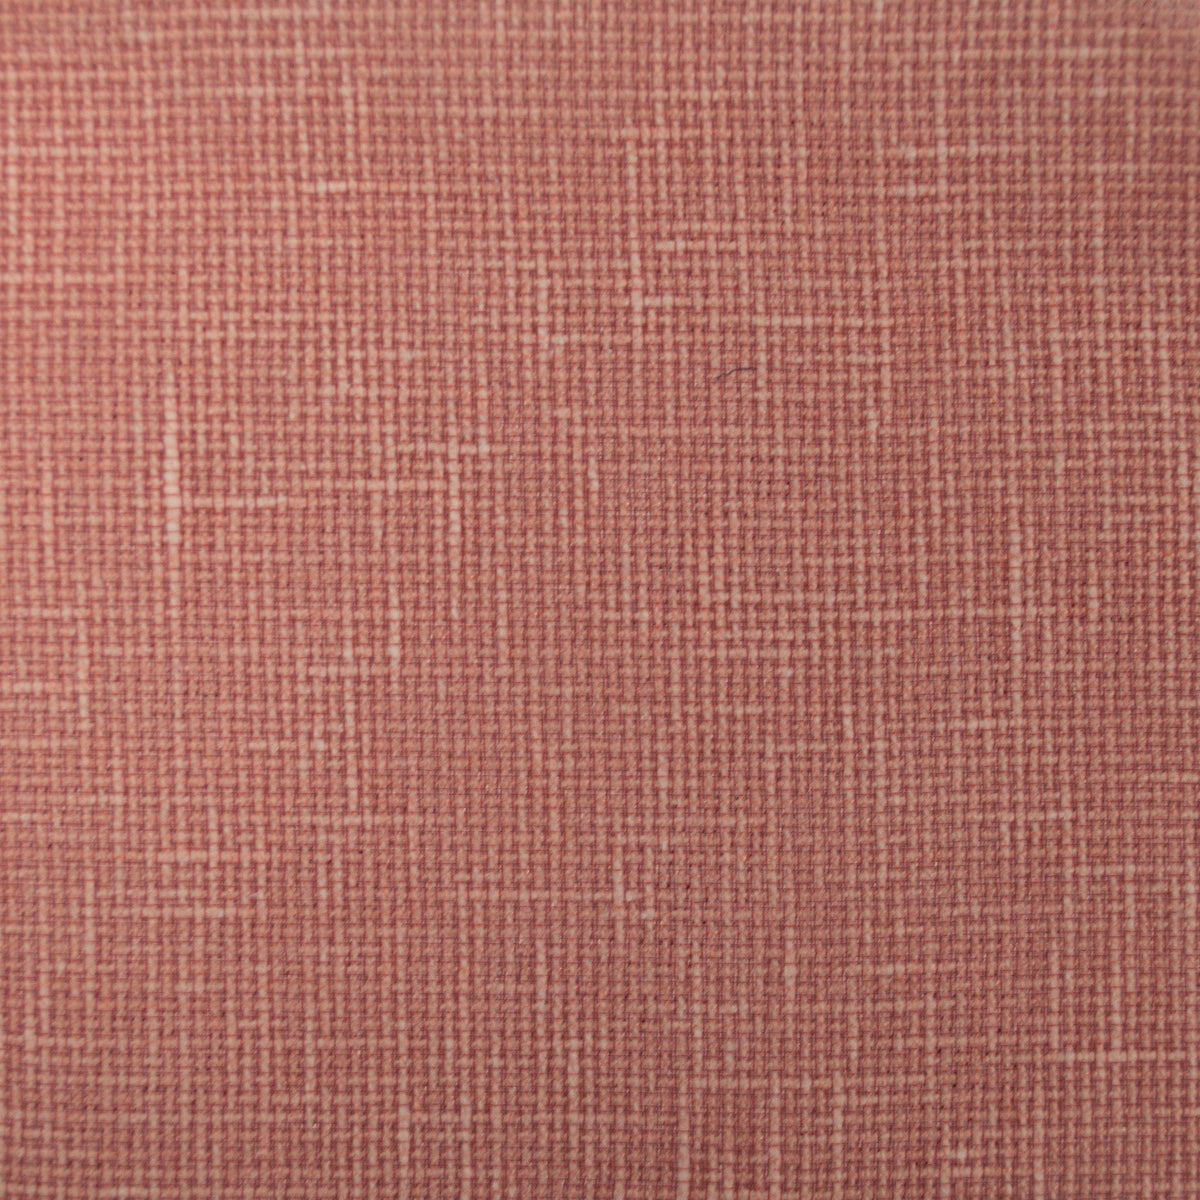 Turks-Sorbet - Atlanta Fabrics